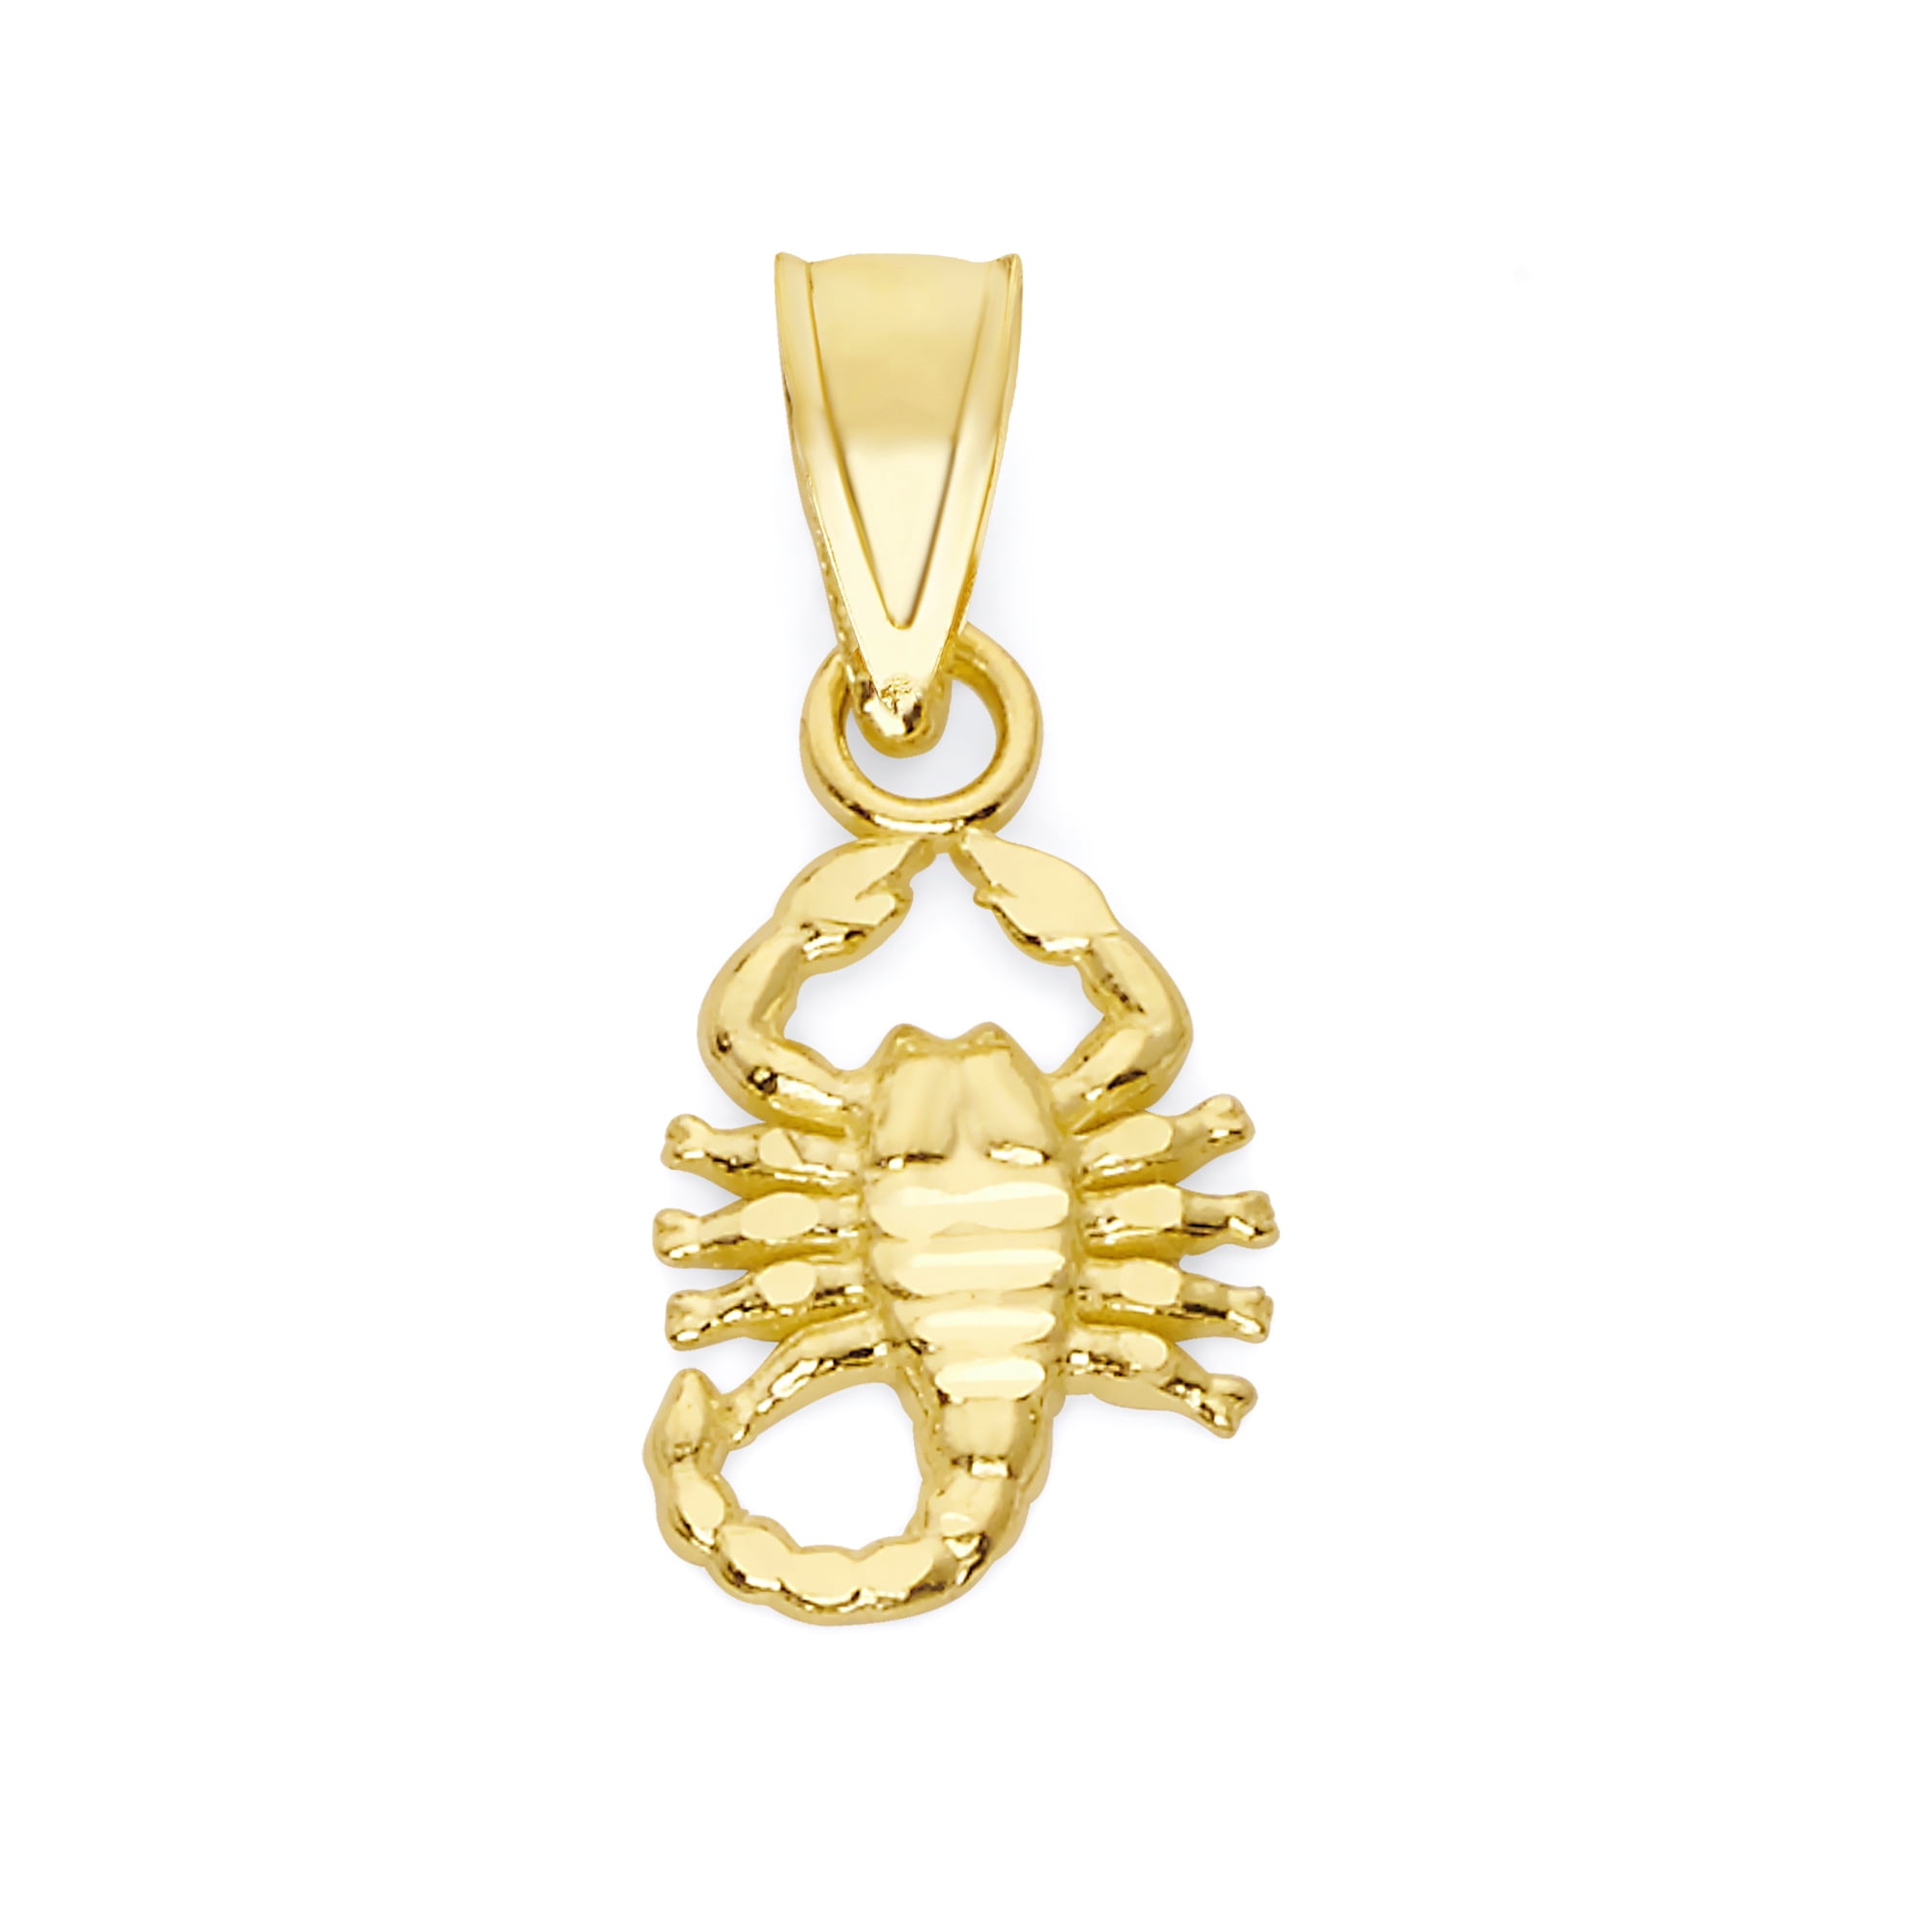 Fine 14k Two-Tone Yellow Gold Diamond Scorpio Zodiac Sign Rope Charm Pendant Necklace